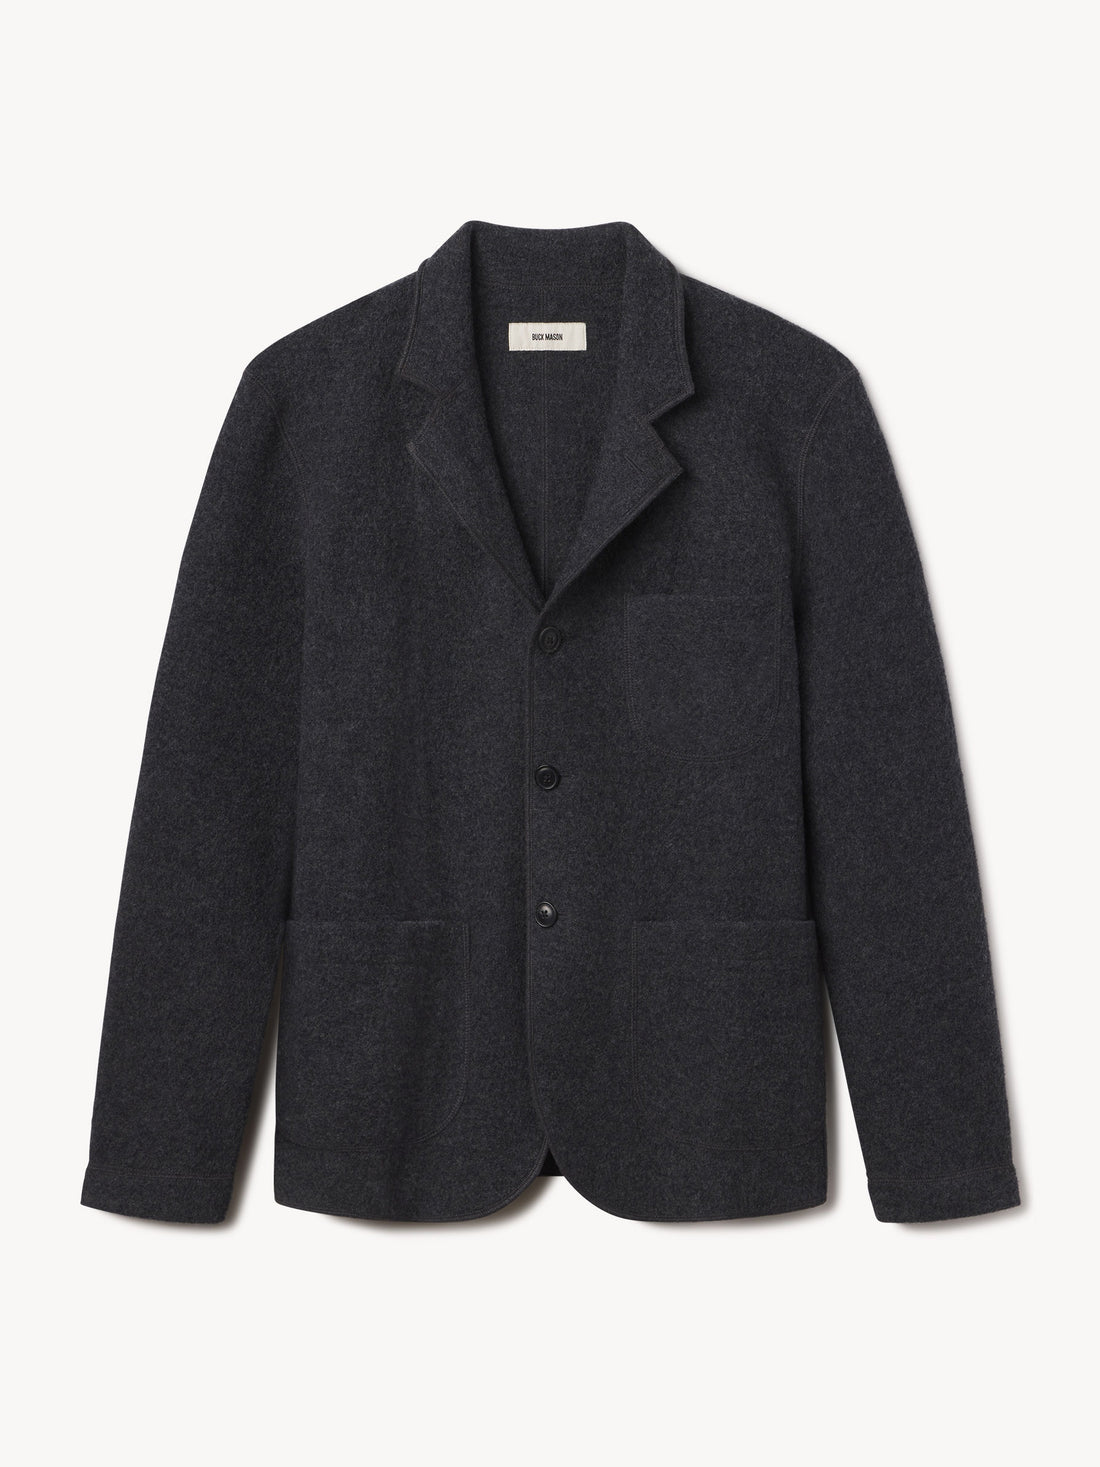 1920s Men’s Coats & Jackets History Chore Jacket |  Buck Mason  AT vintagedancer.com